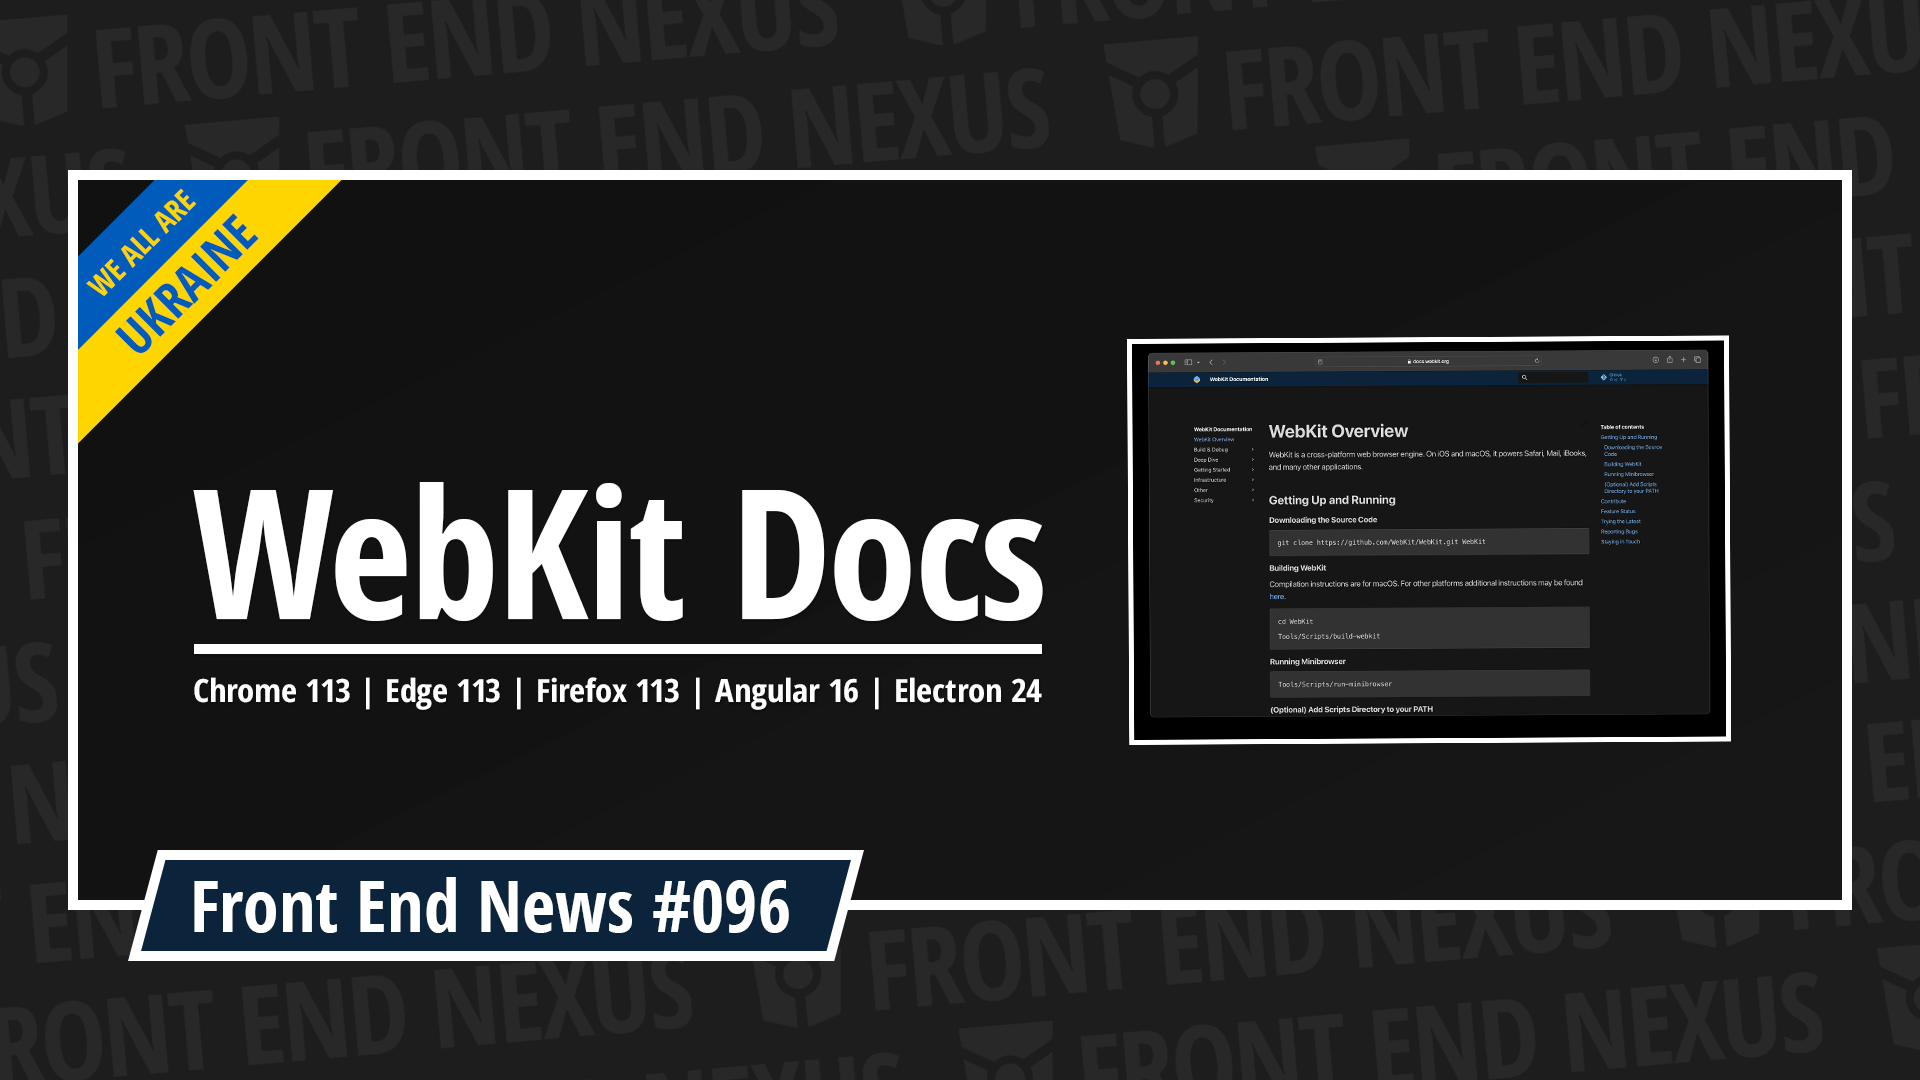 WebKit Documentation, Chrome 113, Edge 113, Firefox 113, Angular 16, Electron 24, and more | Front End News #096